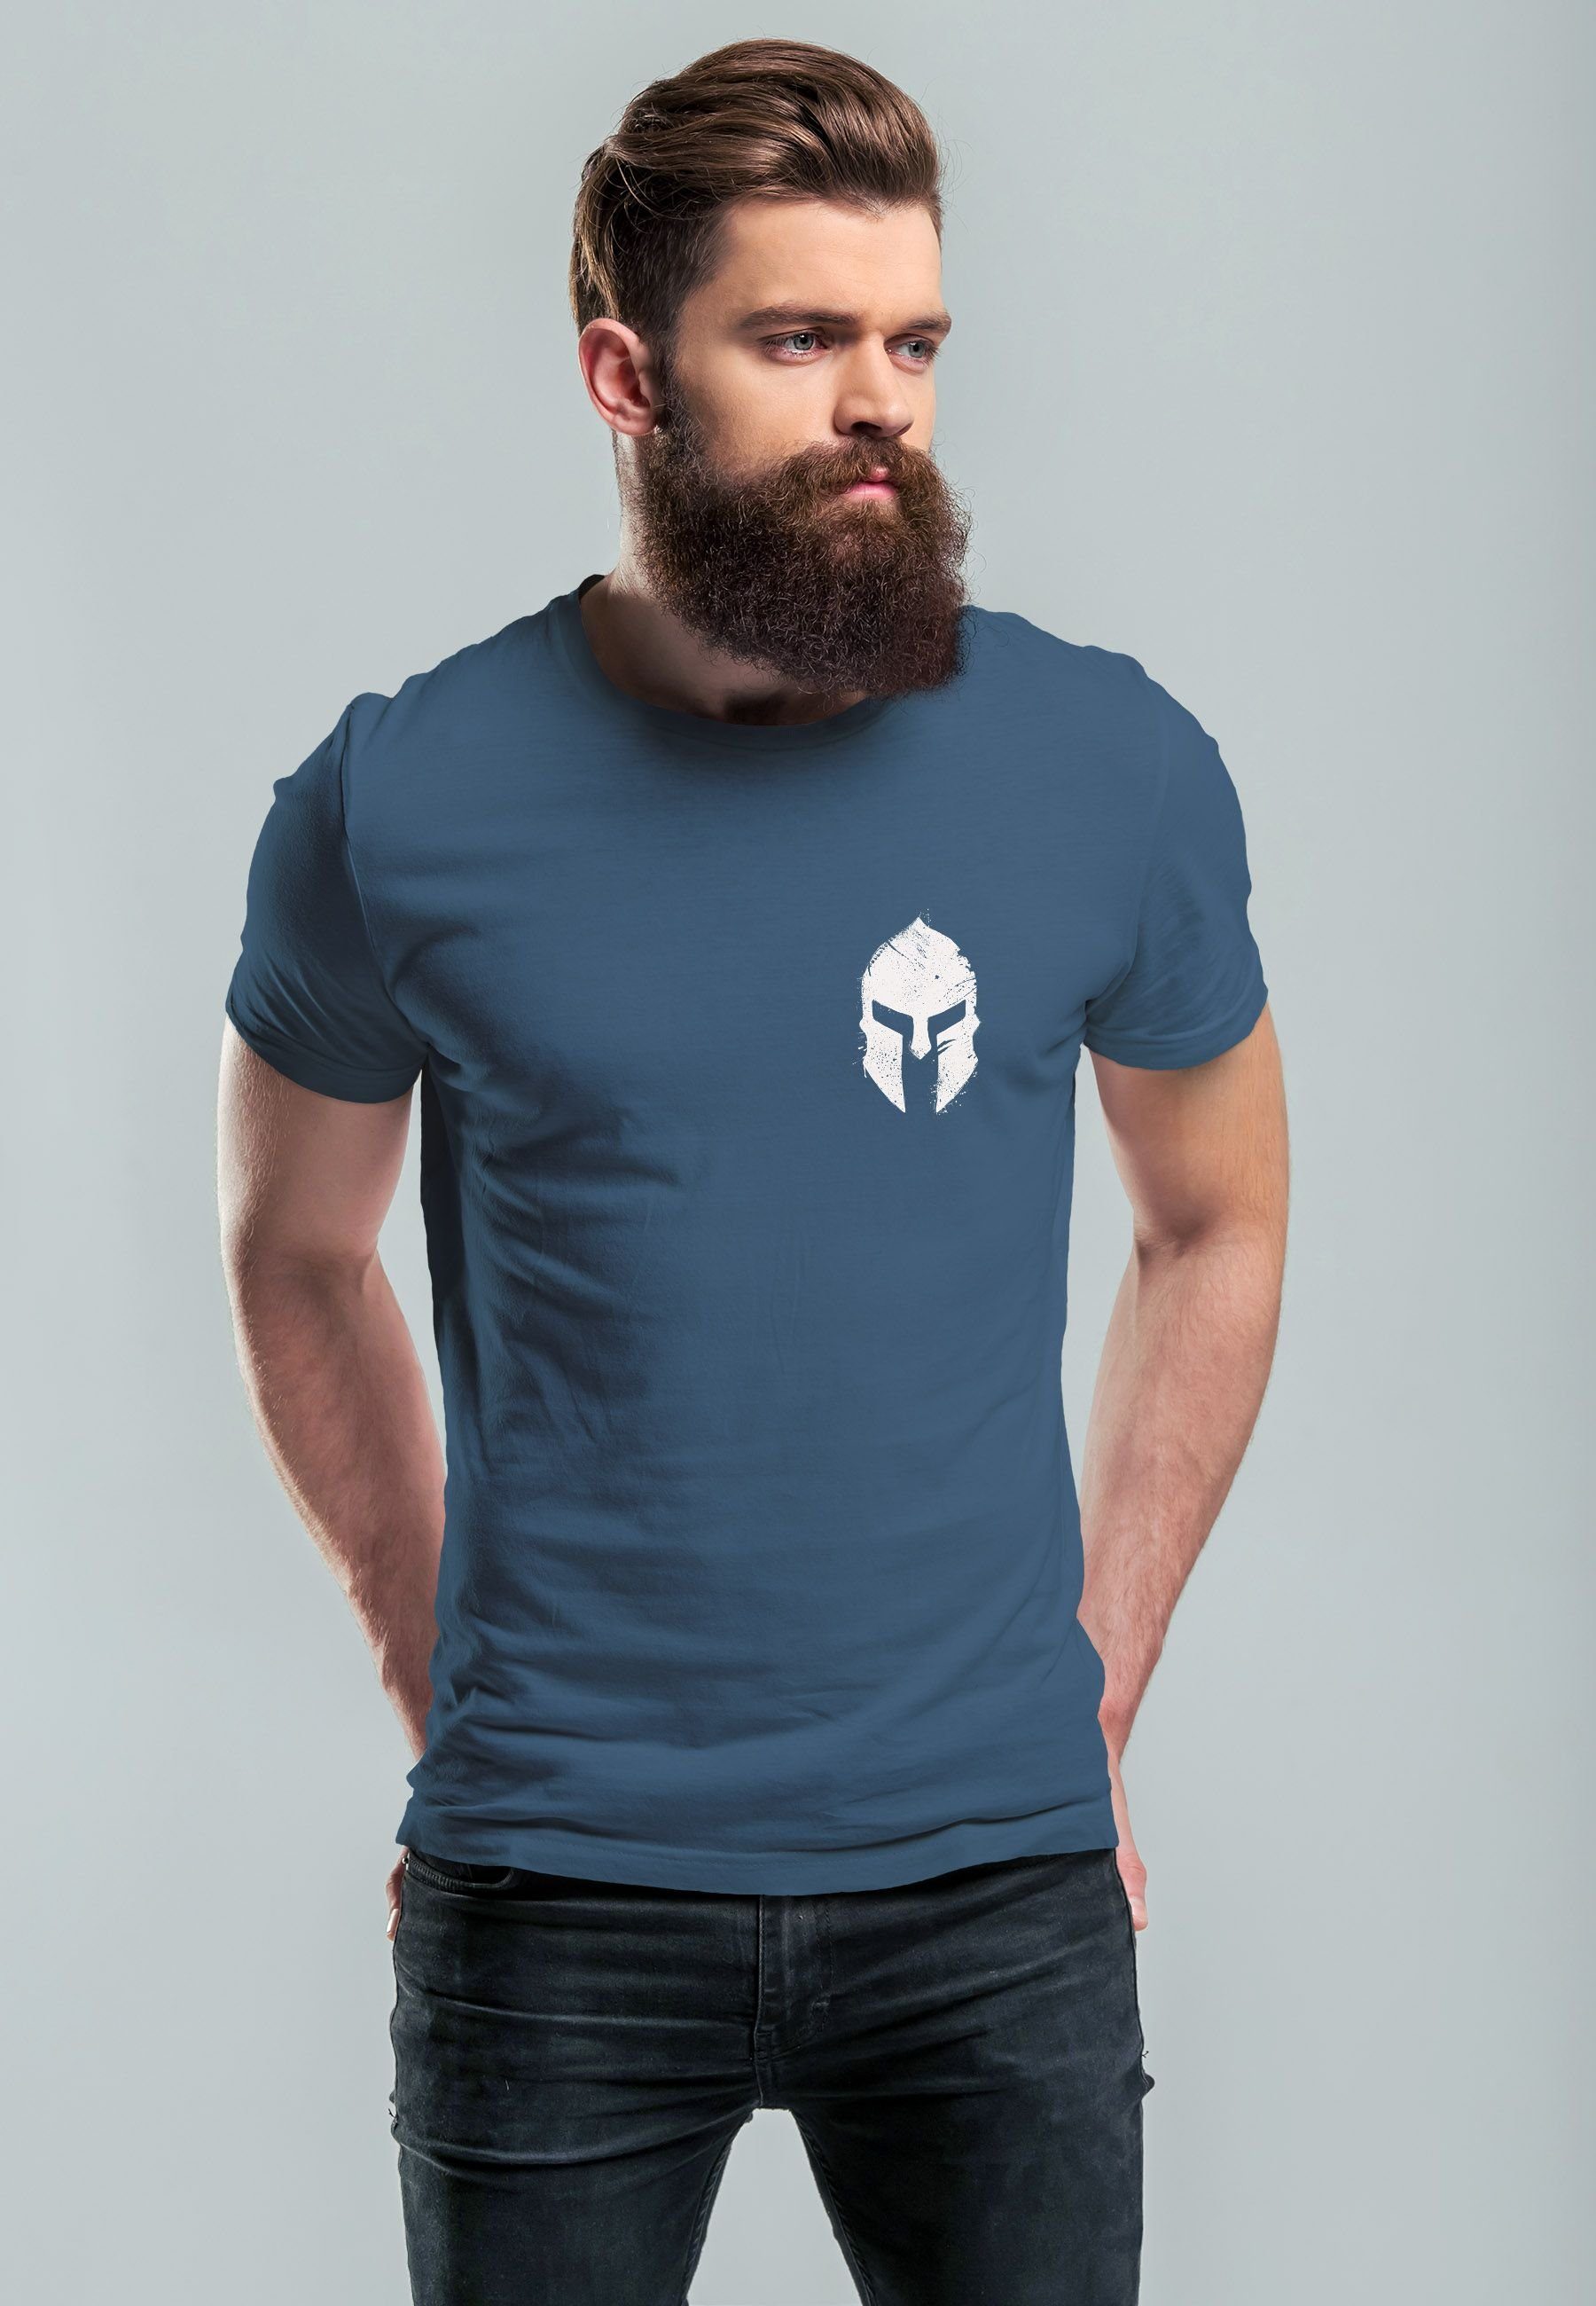 T-Shirt Spartaner Gladiator Sparta-Helm mit Logo Krieger Print Print denim Warr Herren blue Neverless Print-Shirt